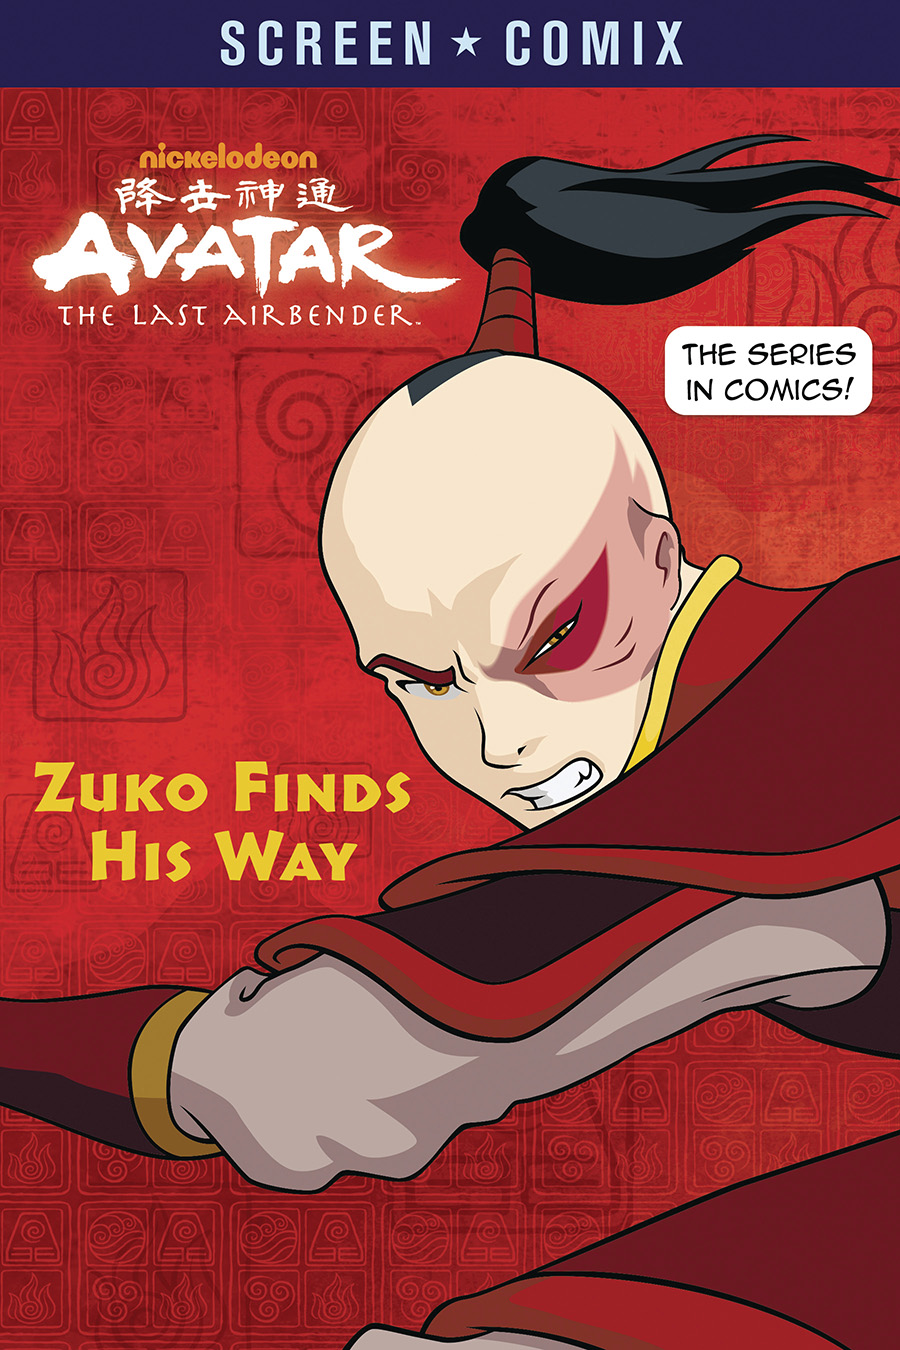 Avatar The Last Airbender Screen Comix Vol 3 Zuko Finds His Way TP